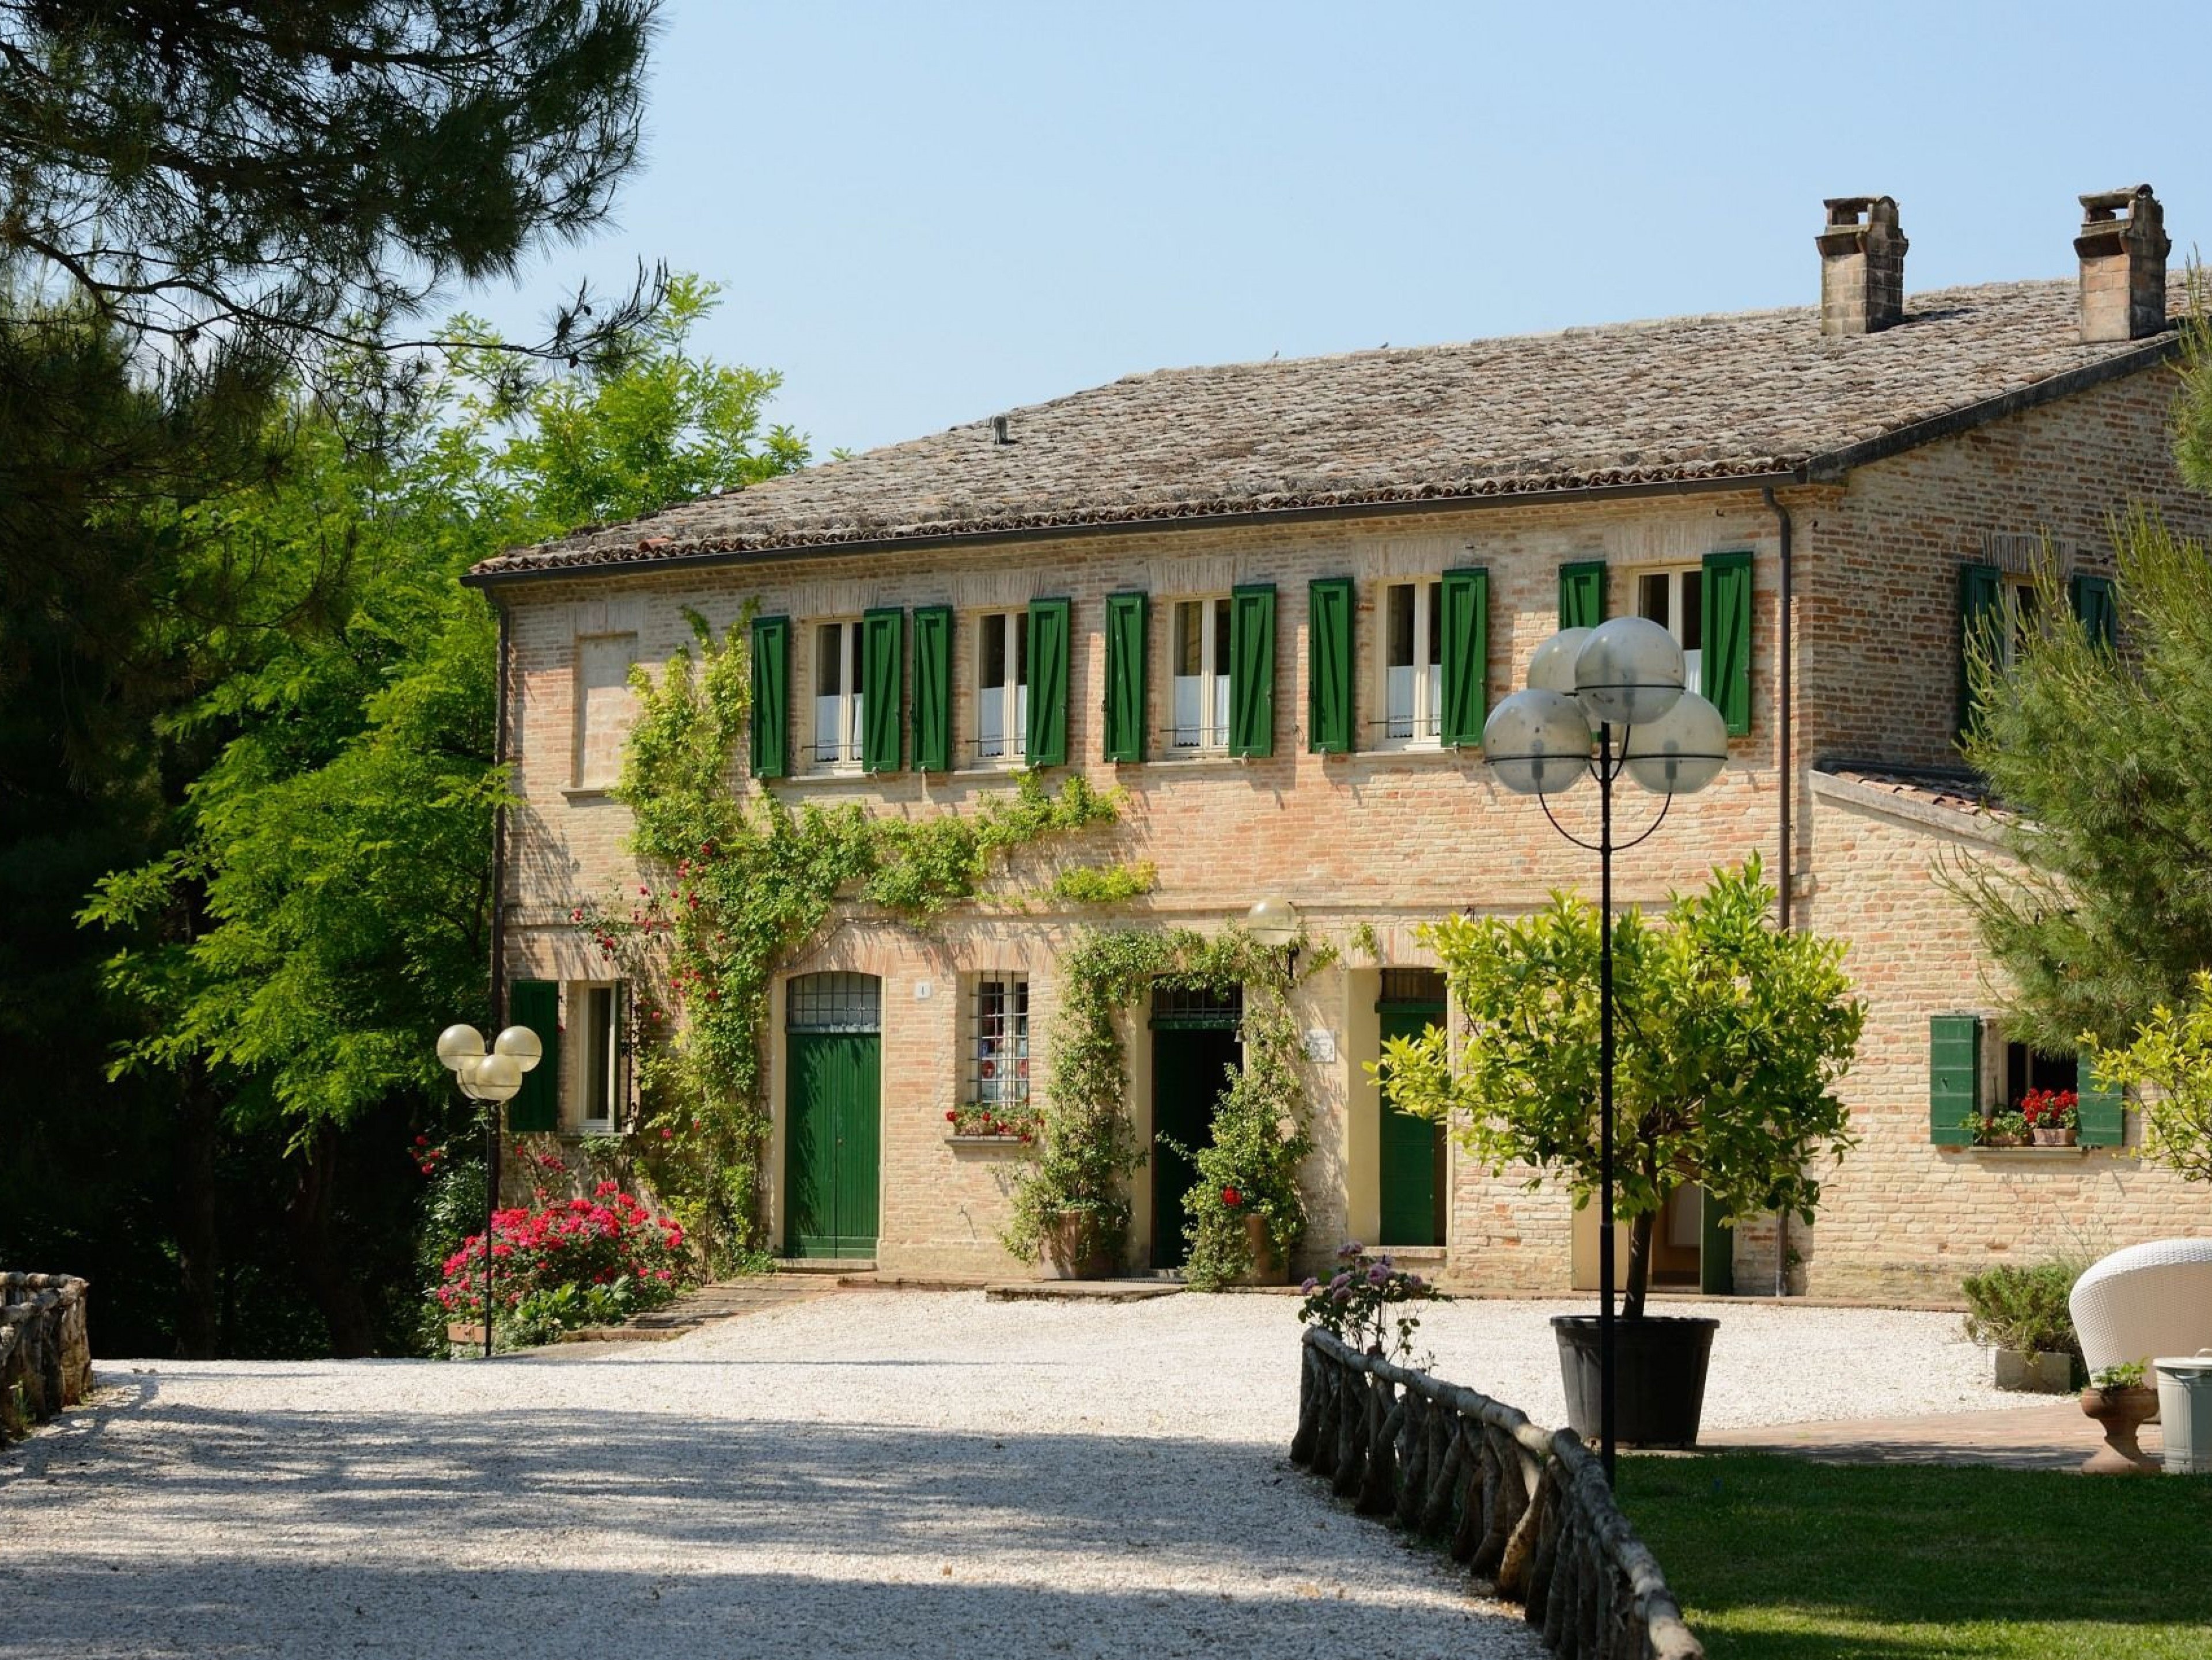 Long-term rentals in Le Marche Italy - Tombolina Relais - Antico Casolare